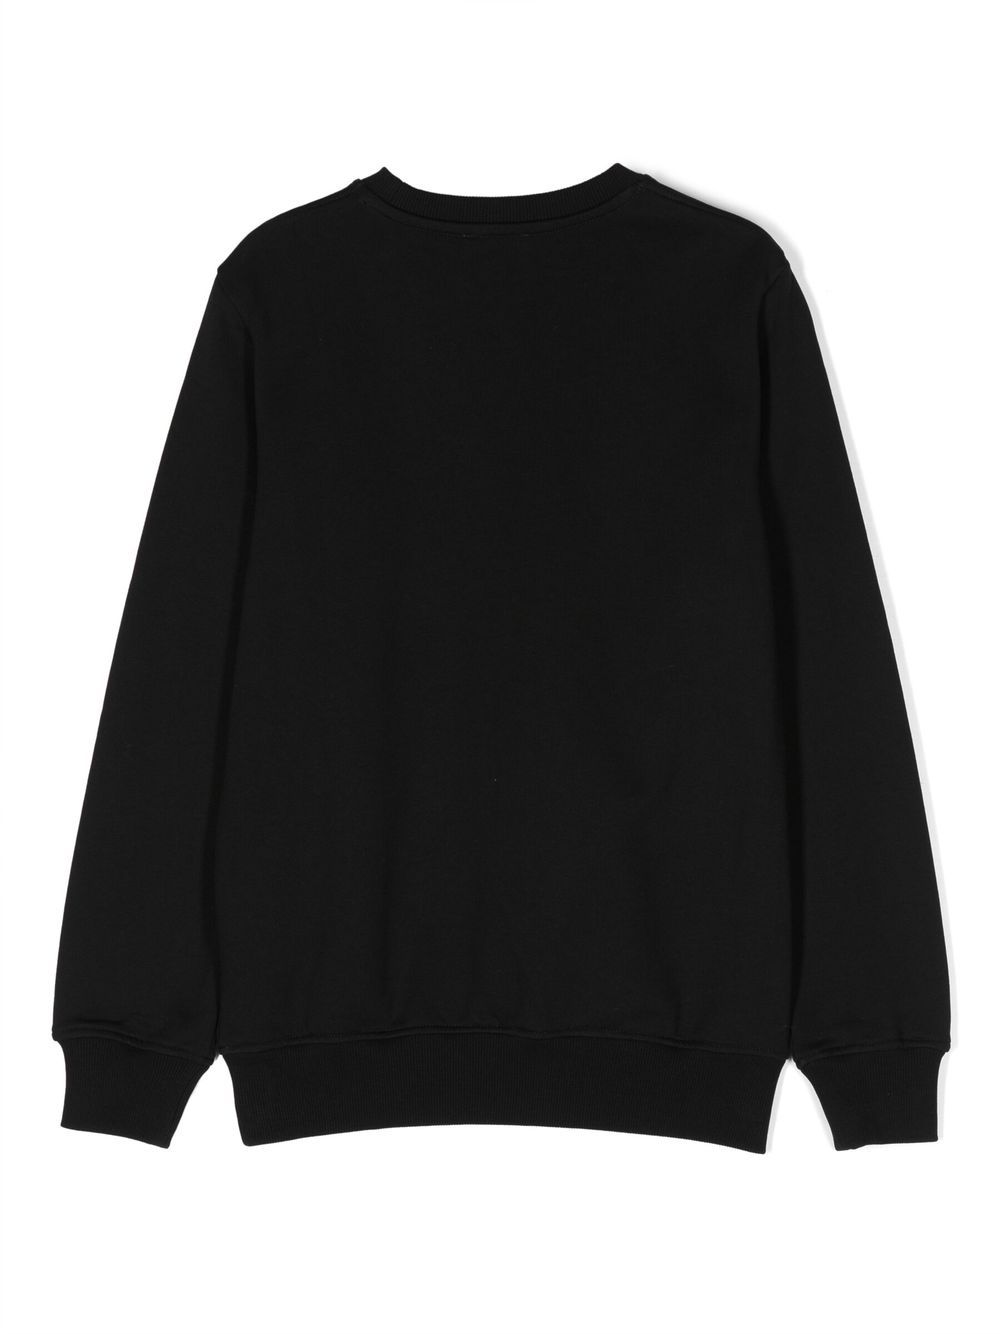 Black sweatshirt for children with print